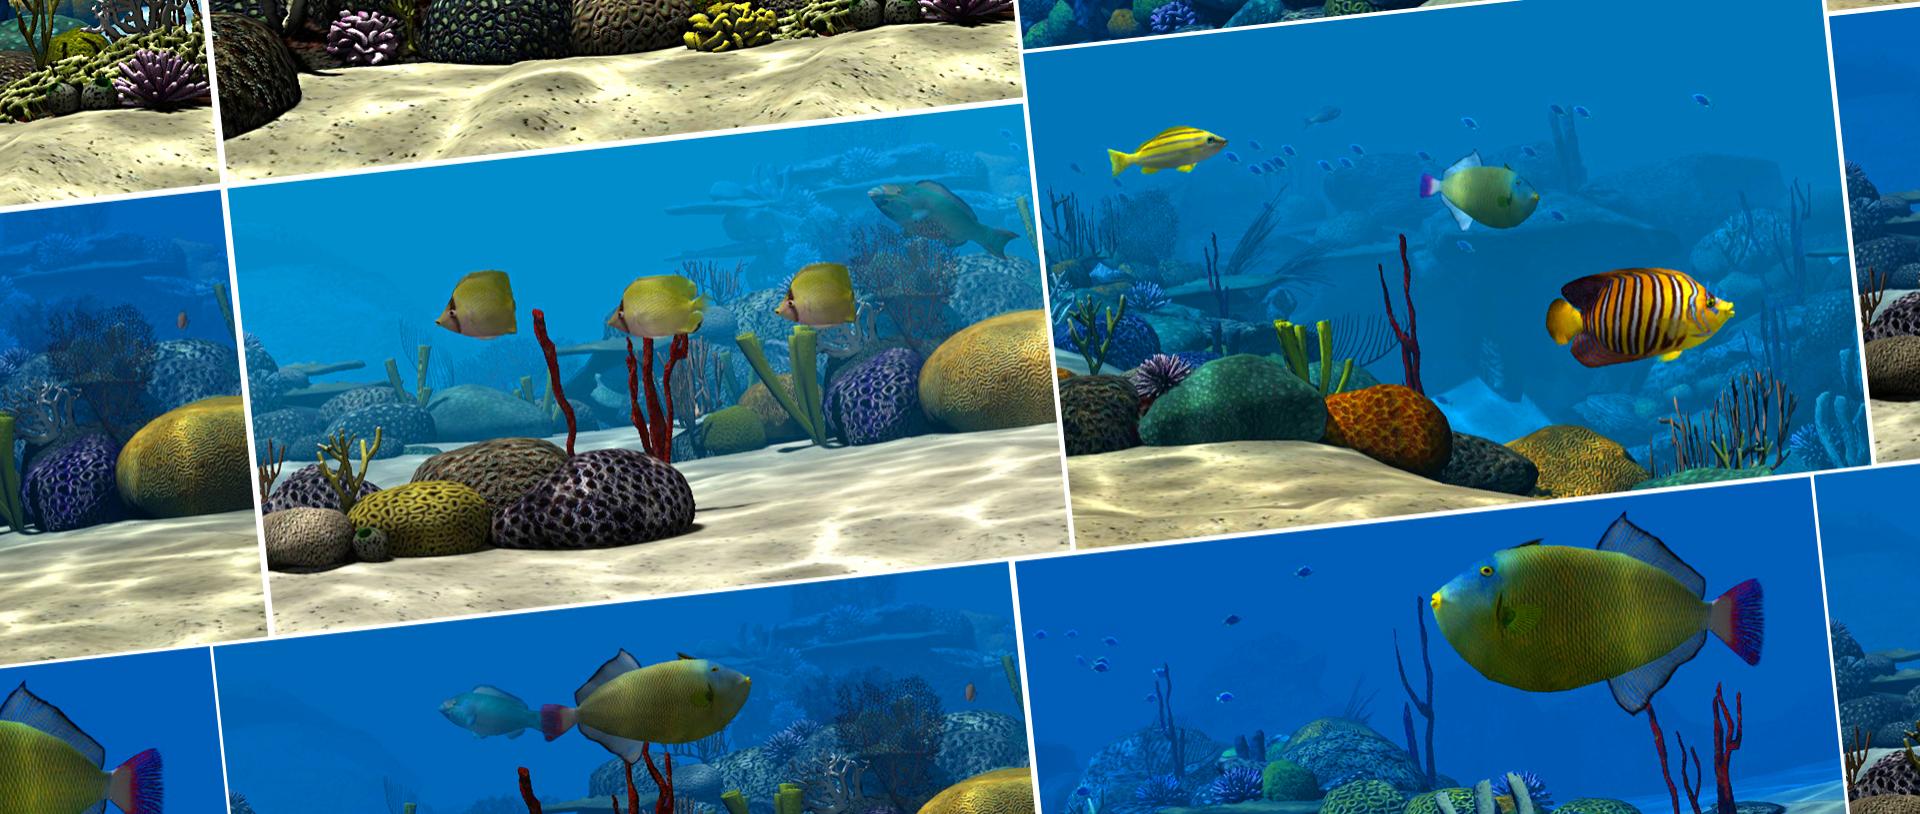 SaarLB - Landesbank Saar - Schaufensterinstallation - Interactive Shopping Window - Interactive Window - Underwater World - 3D World - Interactive Experience - realtime visions